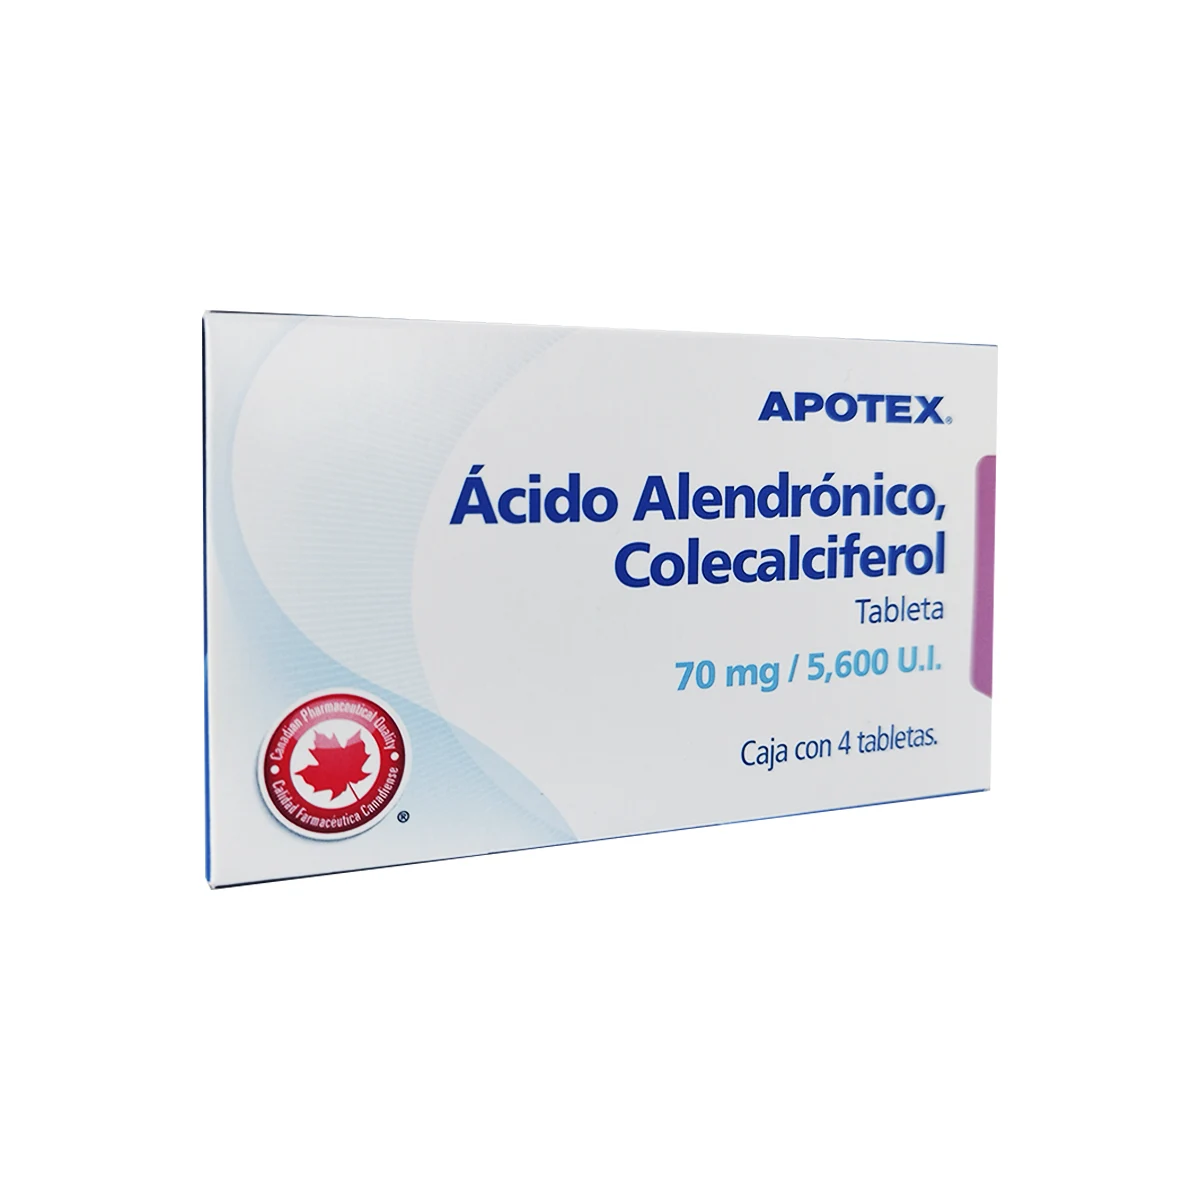 7501277030620 1 acido alendronico colecalciferol acido alendronico - colecalciferol 70 mg/5600 ui tableta 4 tableta(s)